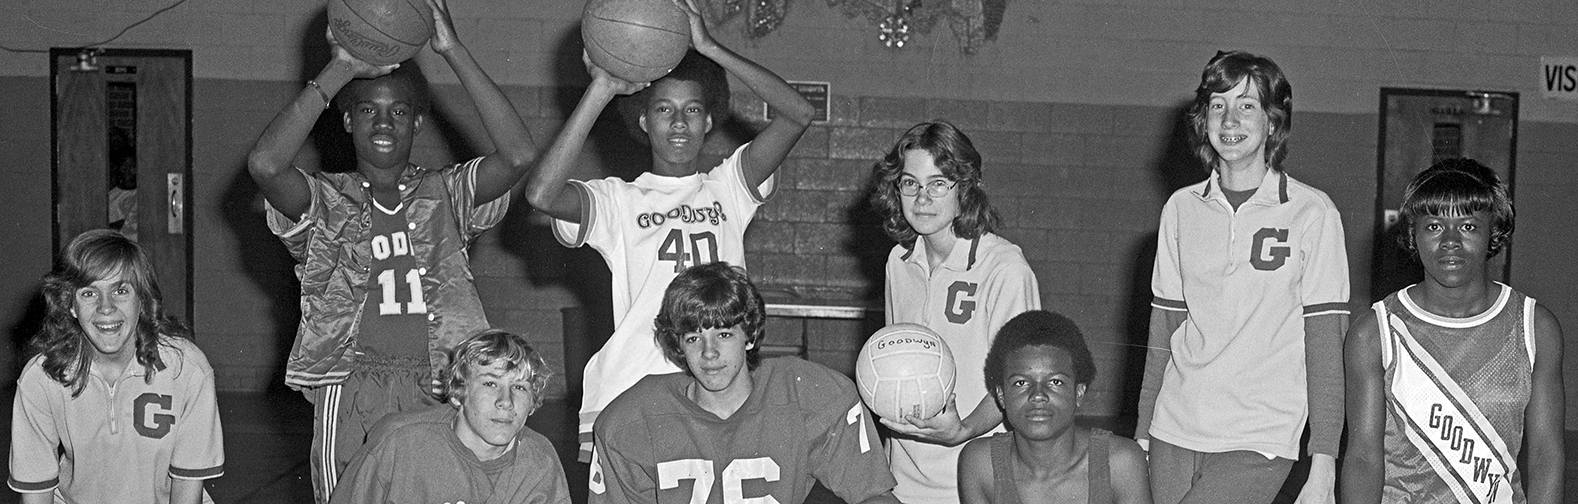 October 24, 1974. Athletes, Goodwyn Jr. High, 209 Perry Hill Rd., Montgomery, AL. Photo by John E. Scott.